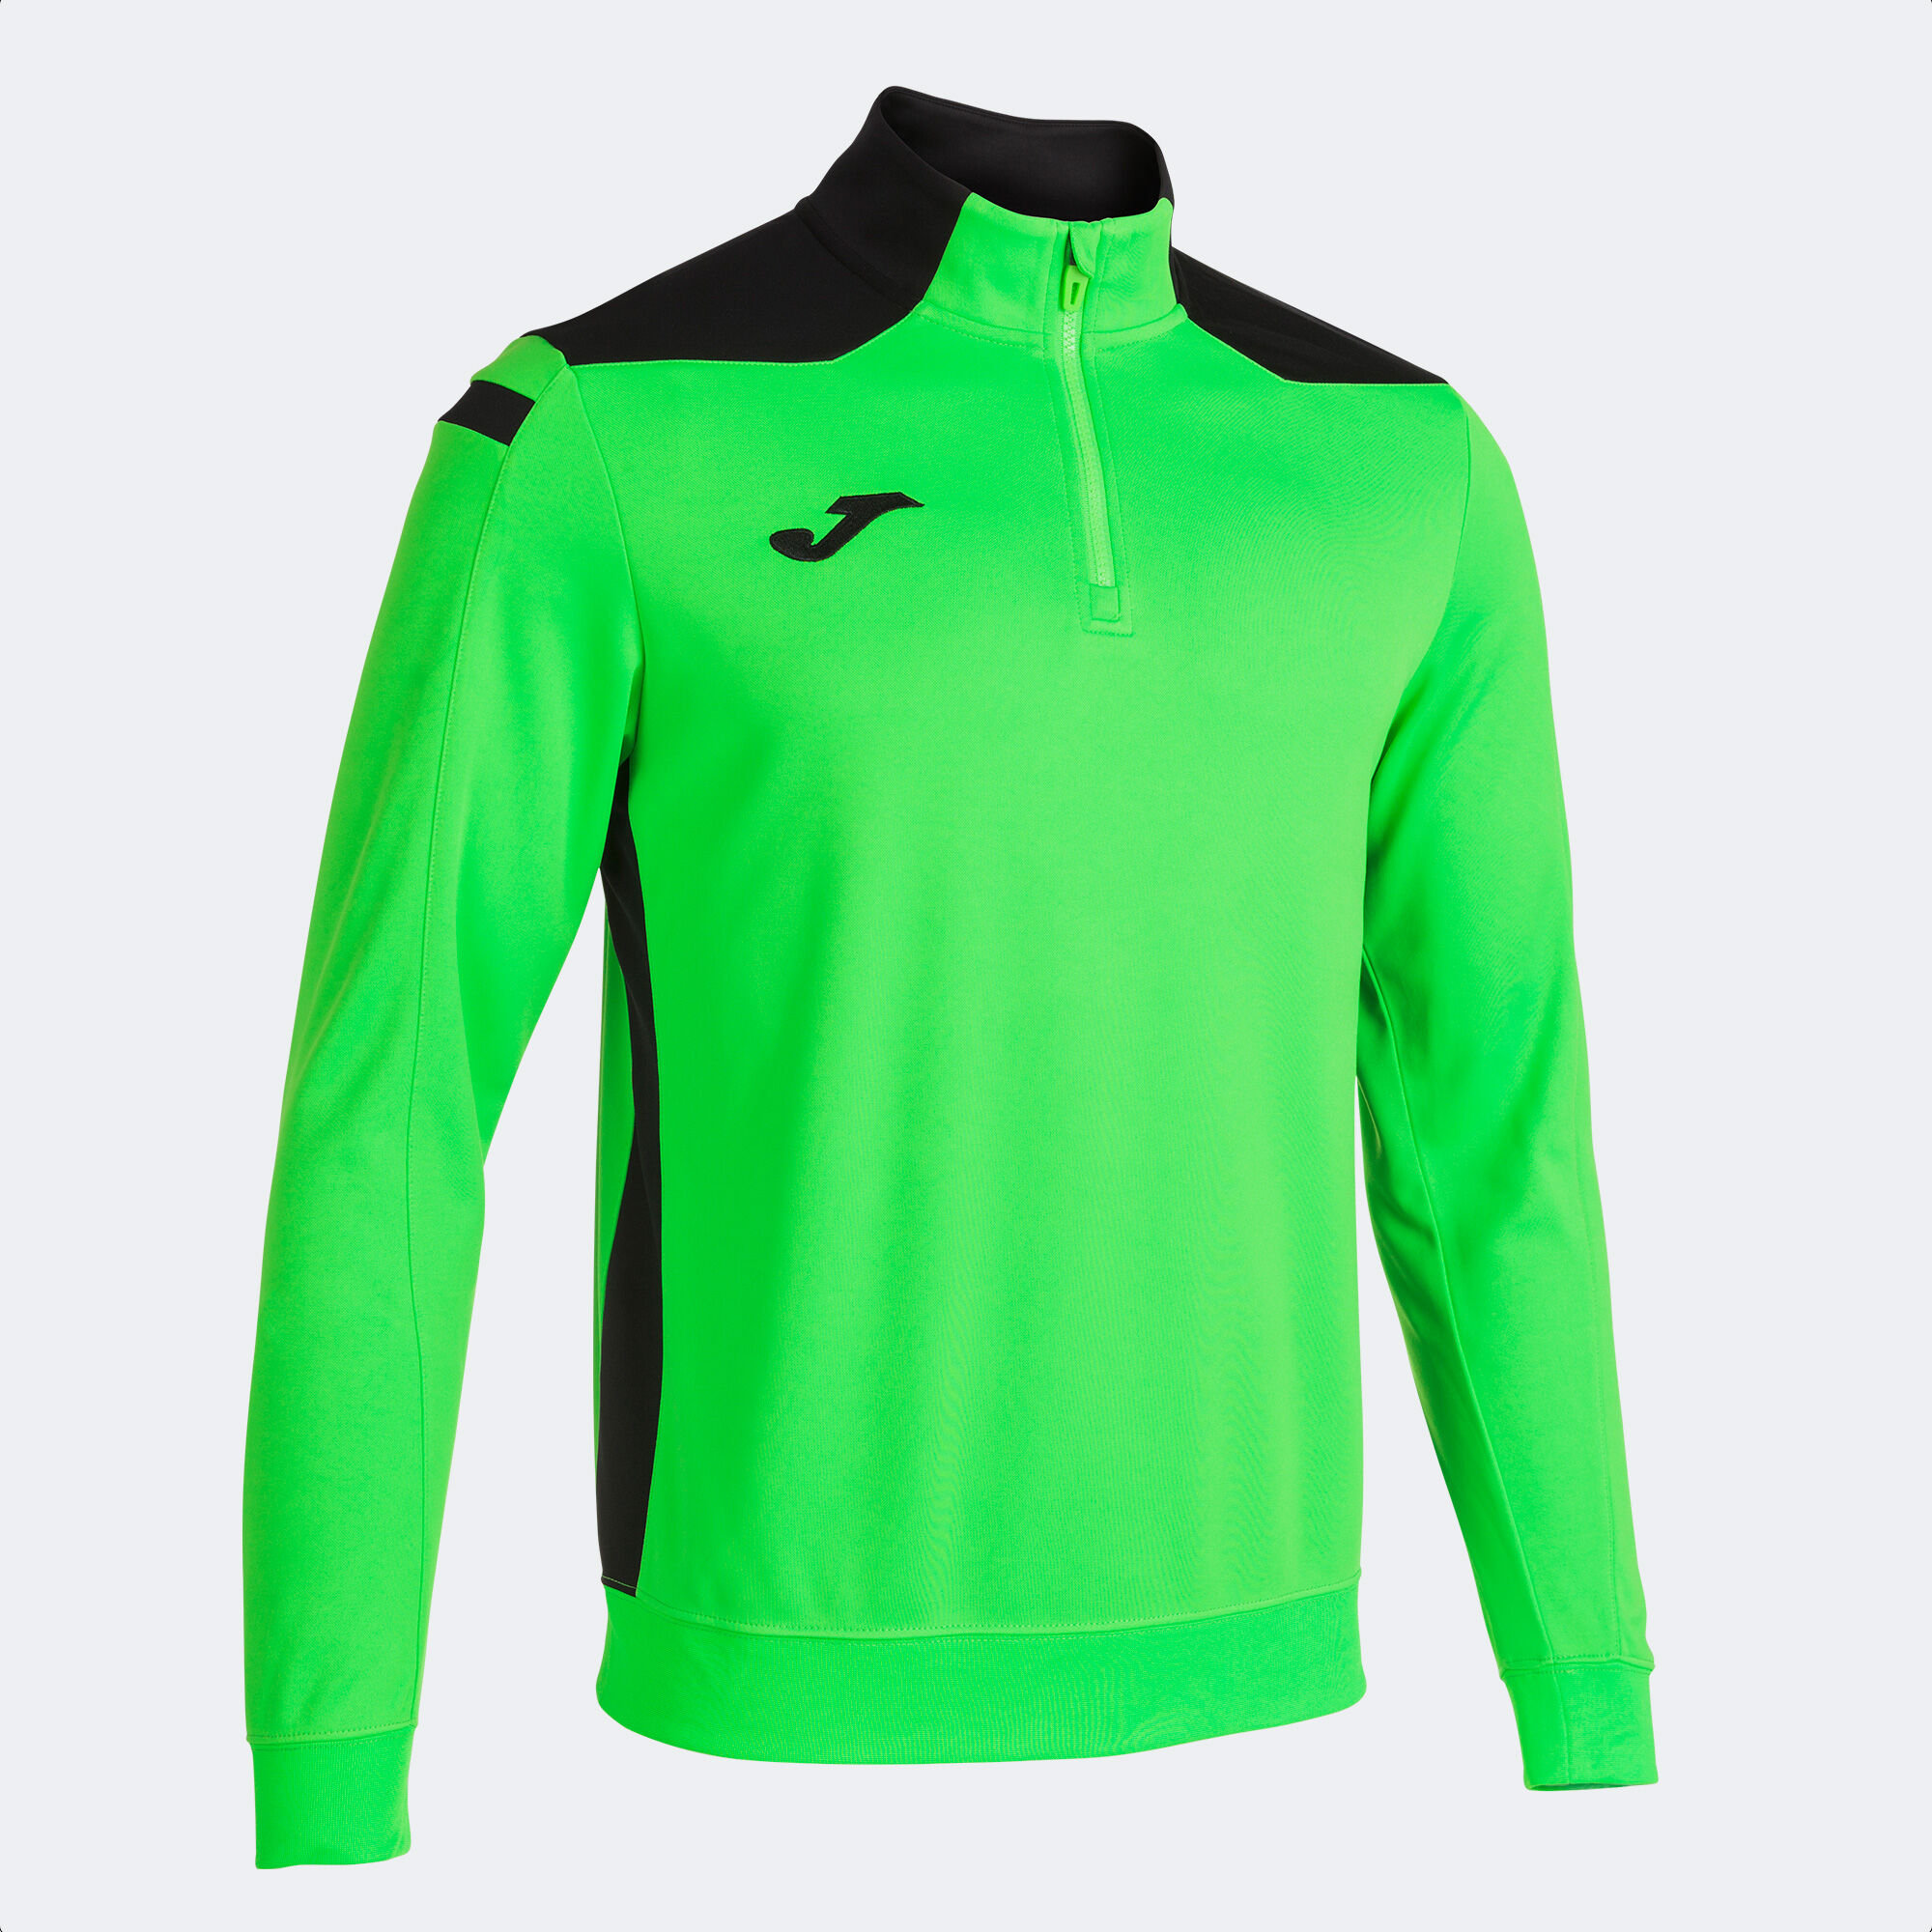 Sweatshirt man Championship VI fluorescent green black